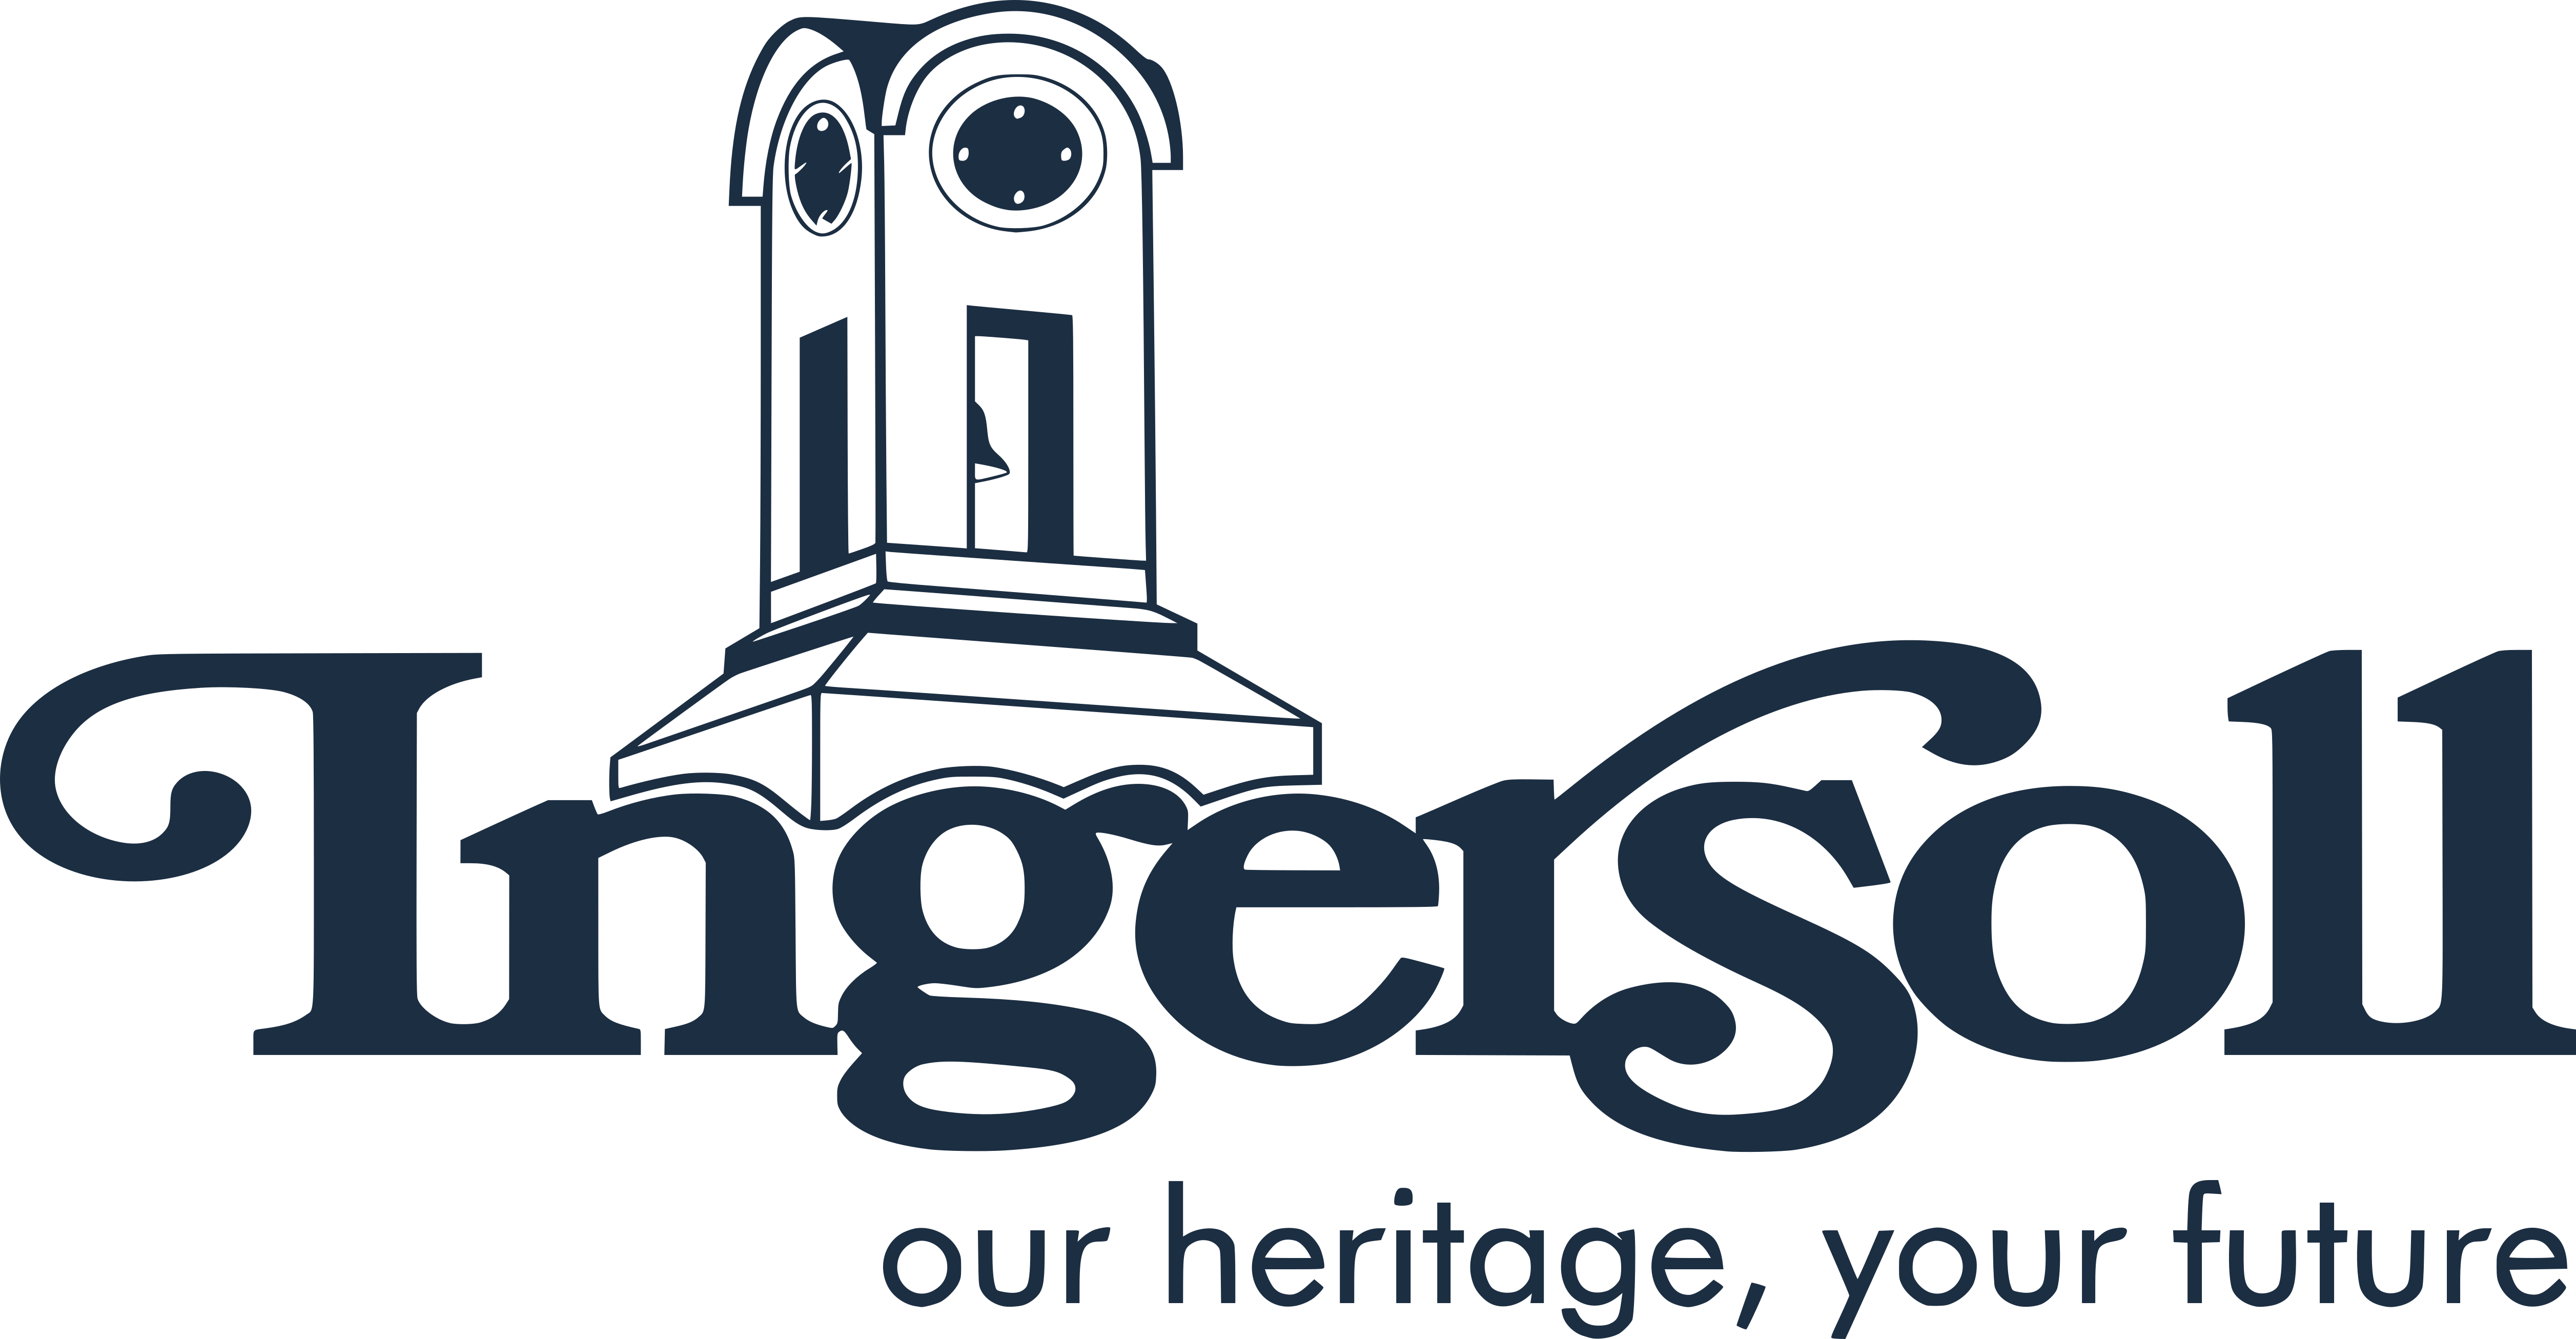 Town of Ingersoll logo